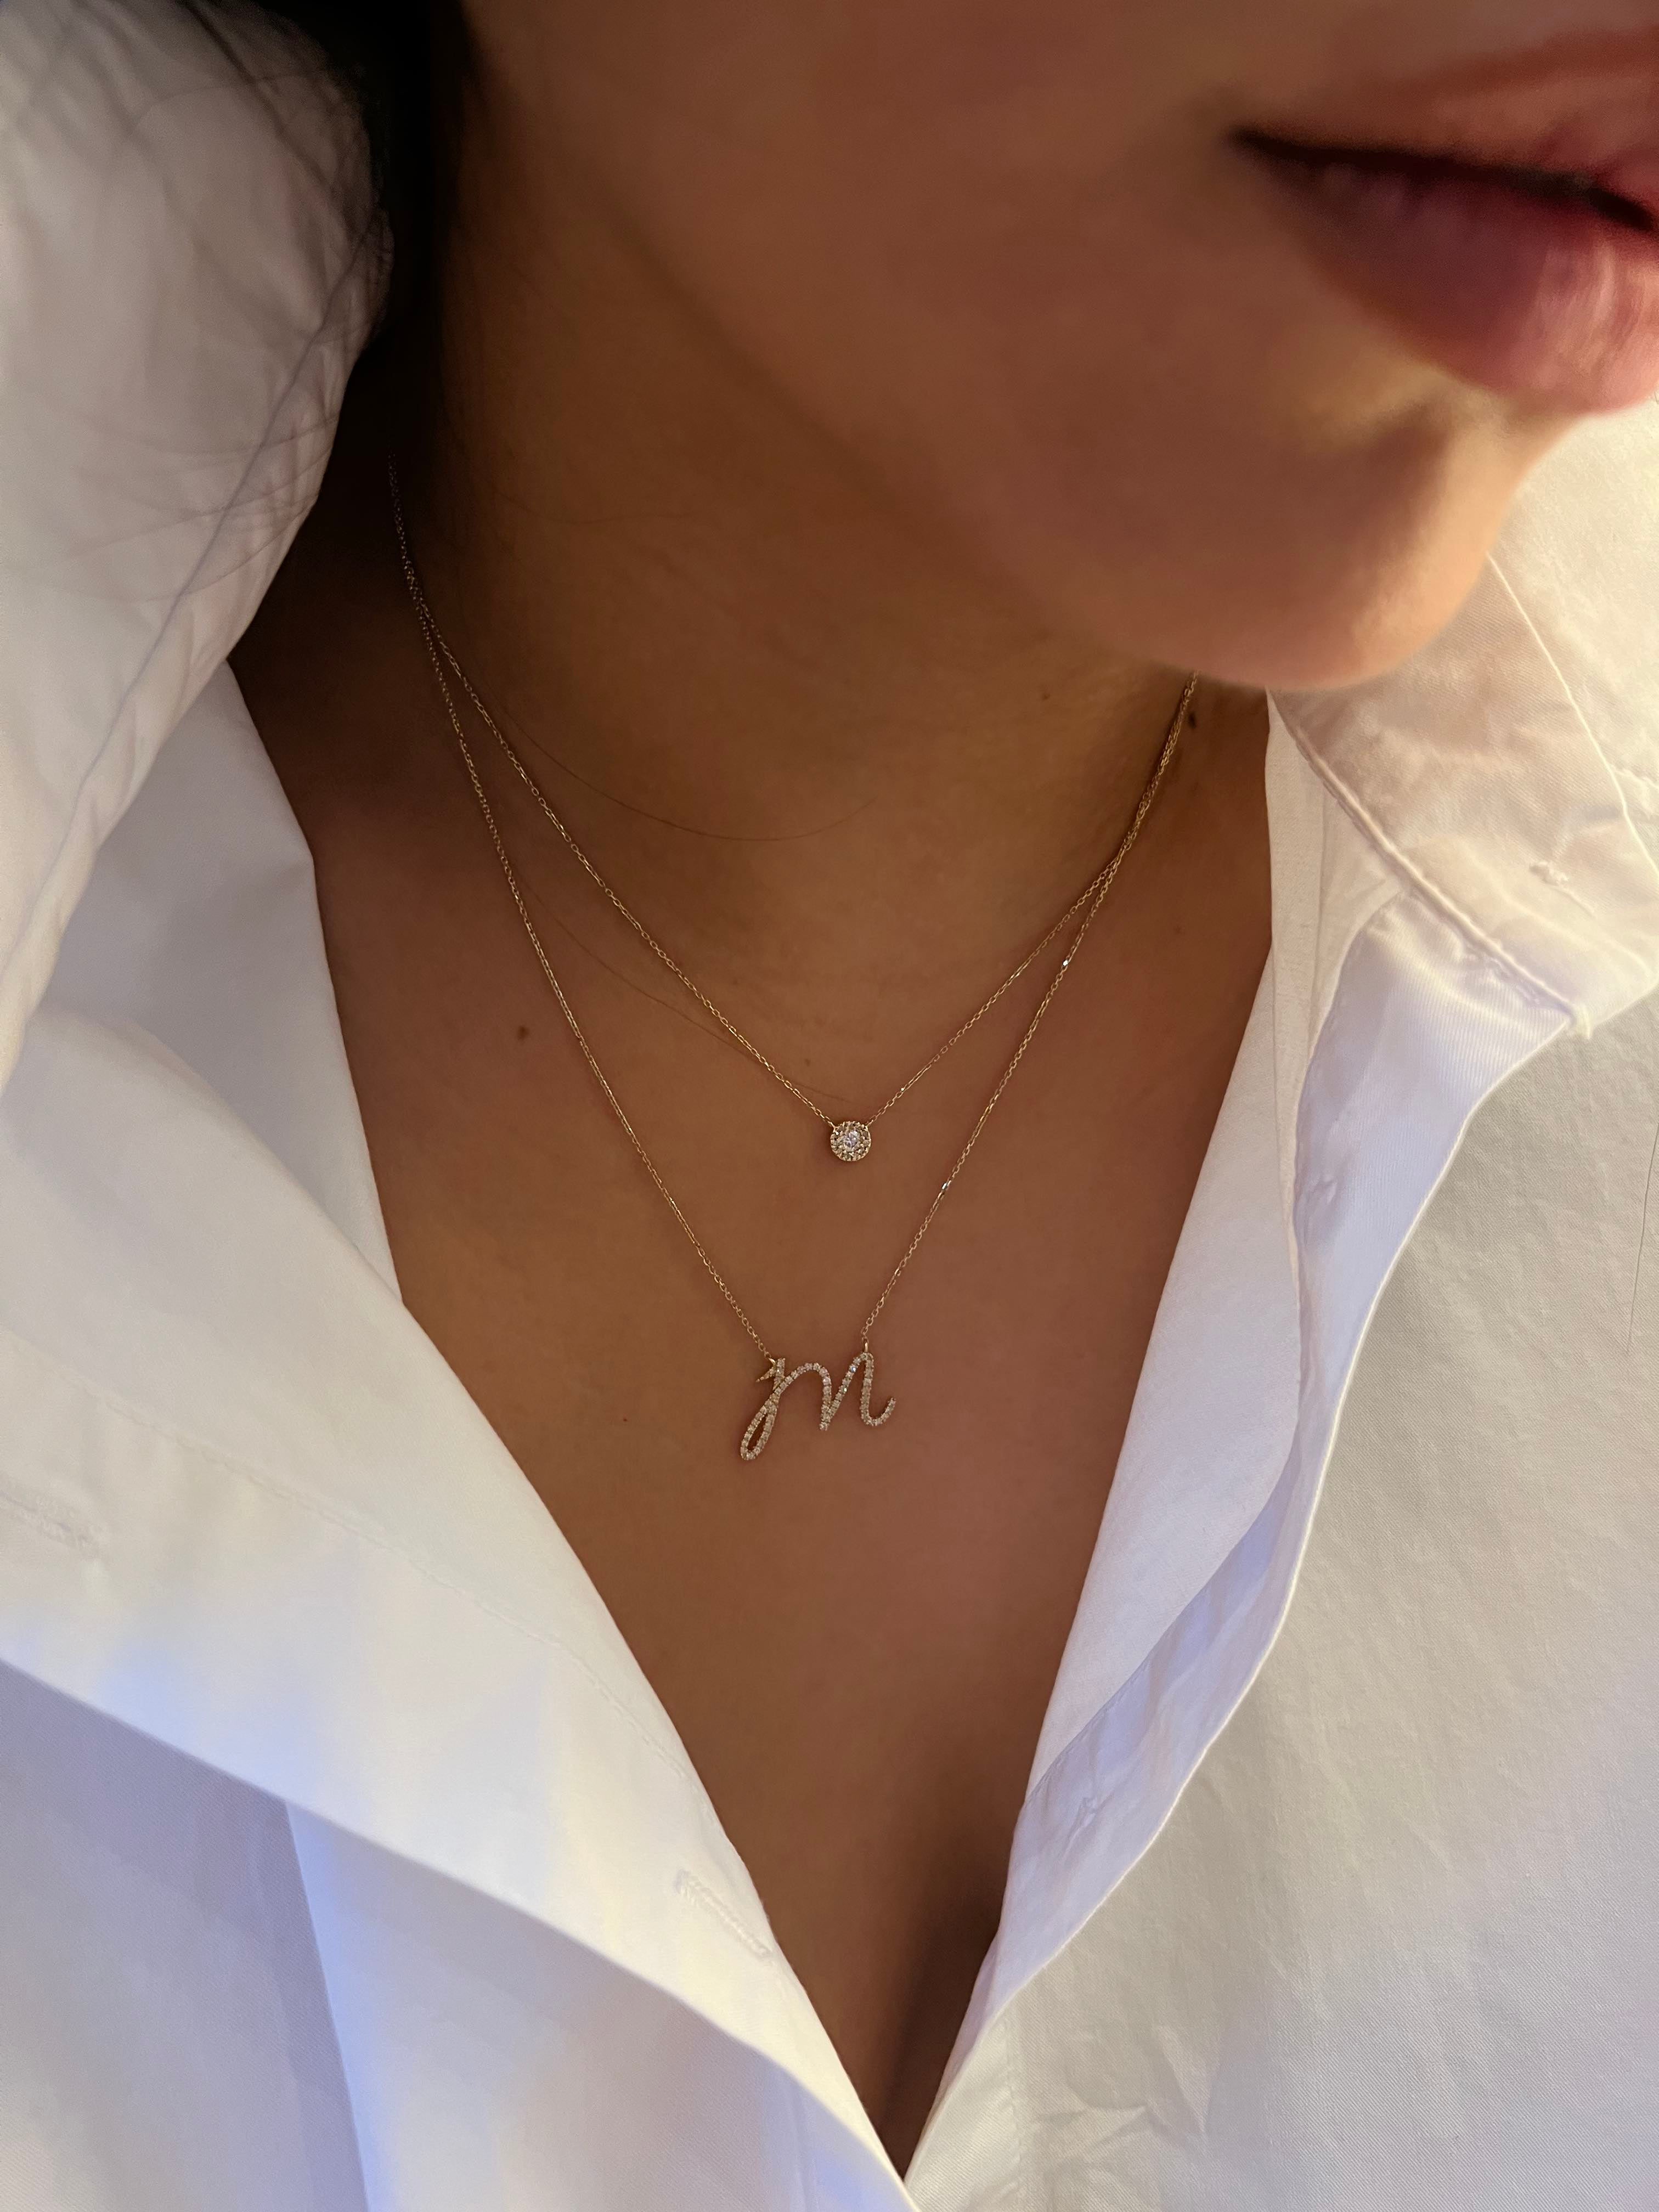 Diamond A Initial Necklace – Diana the Jeweler